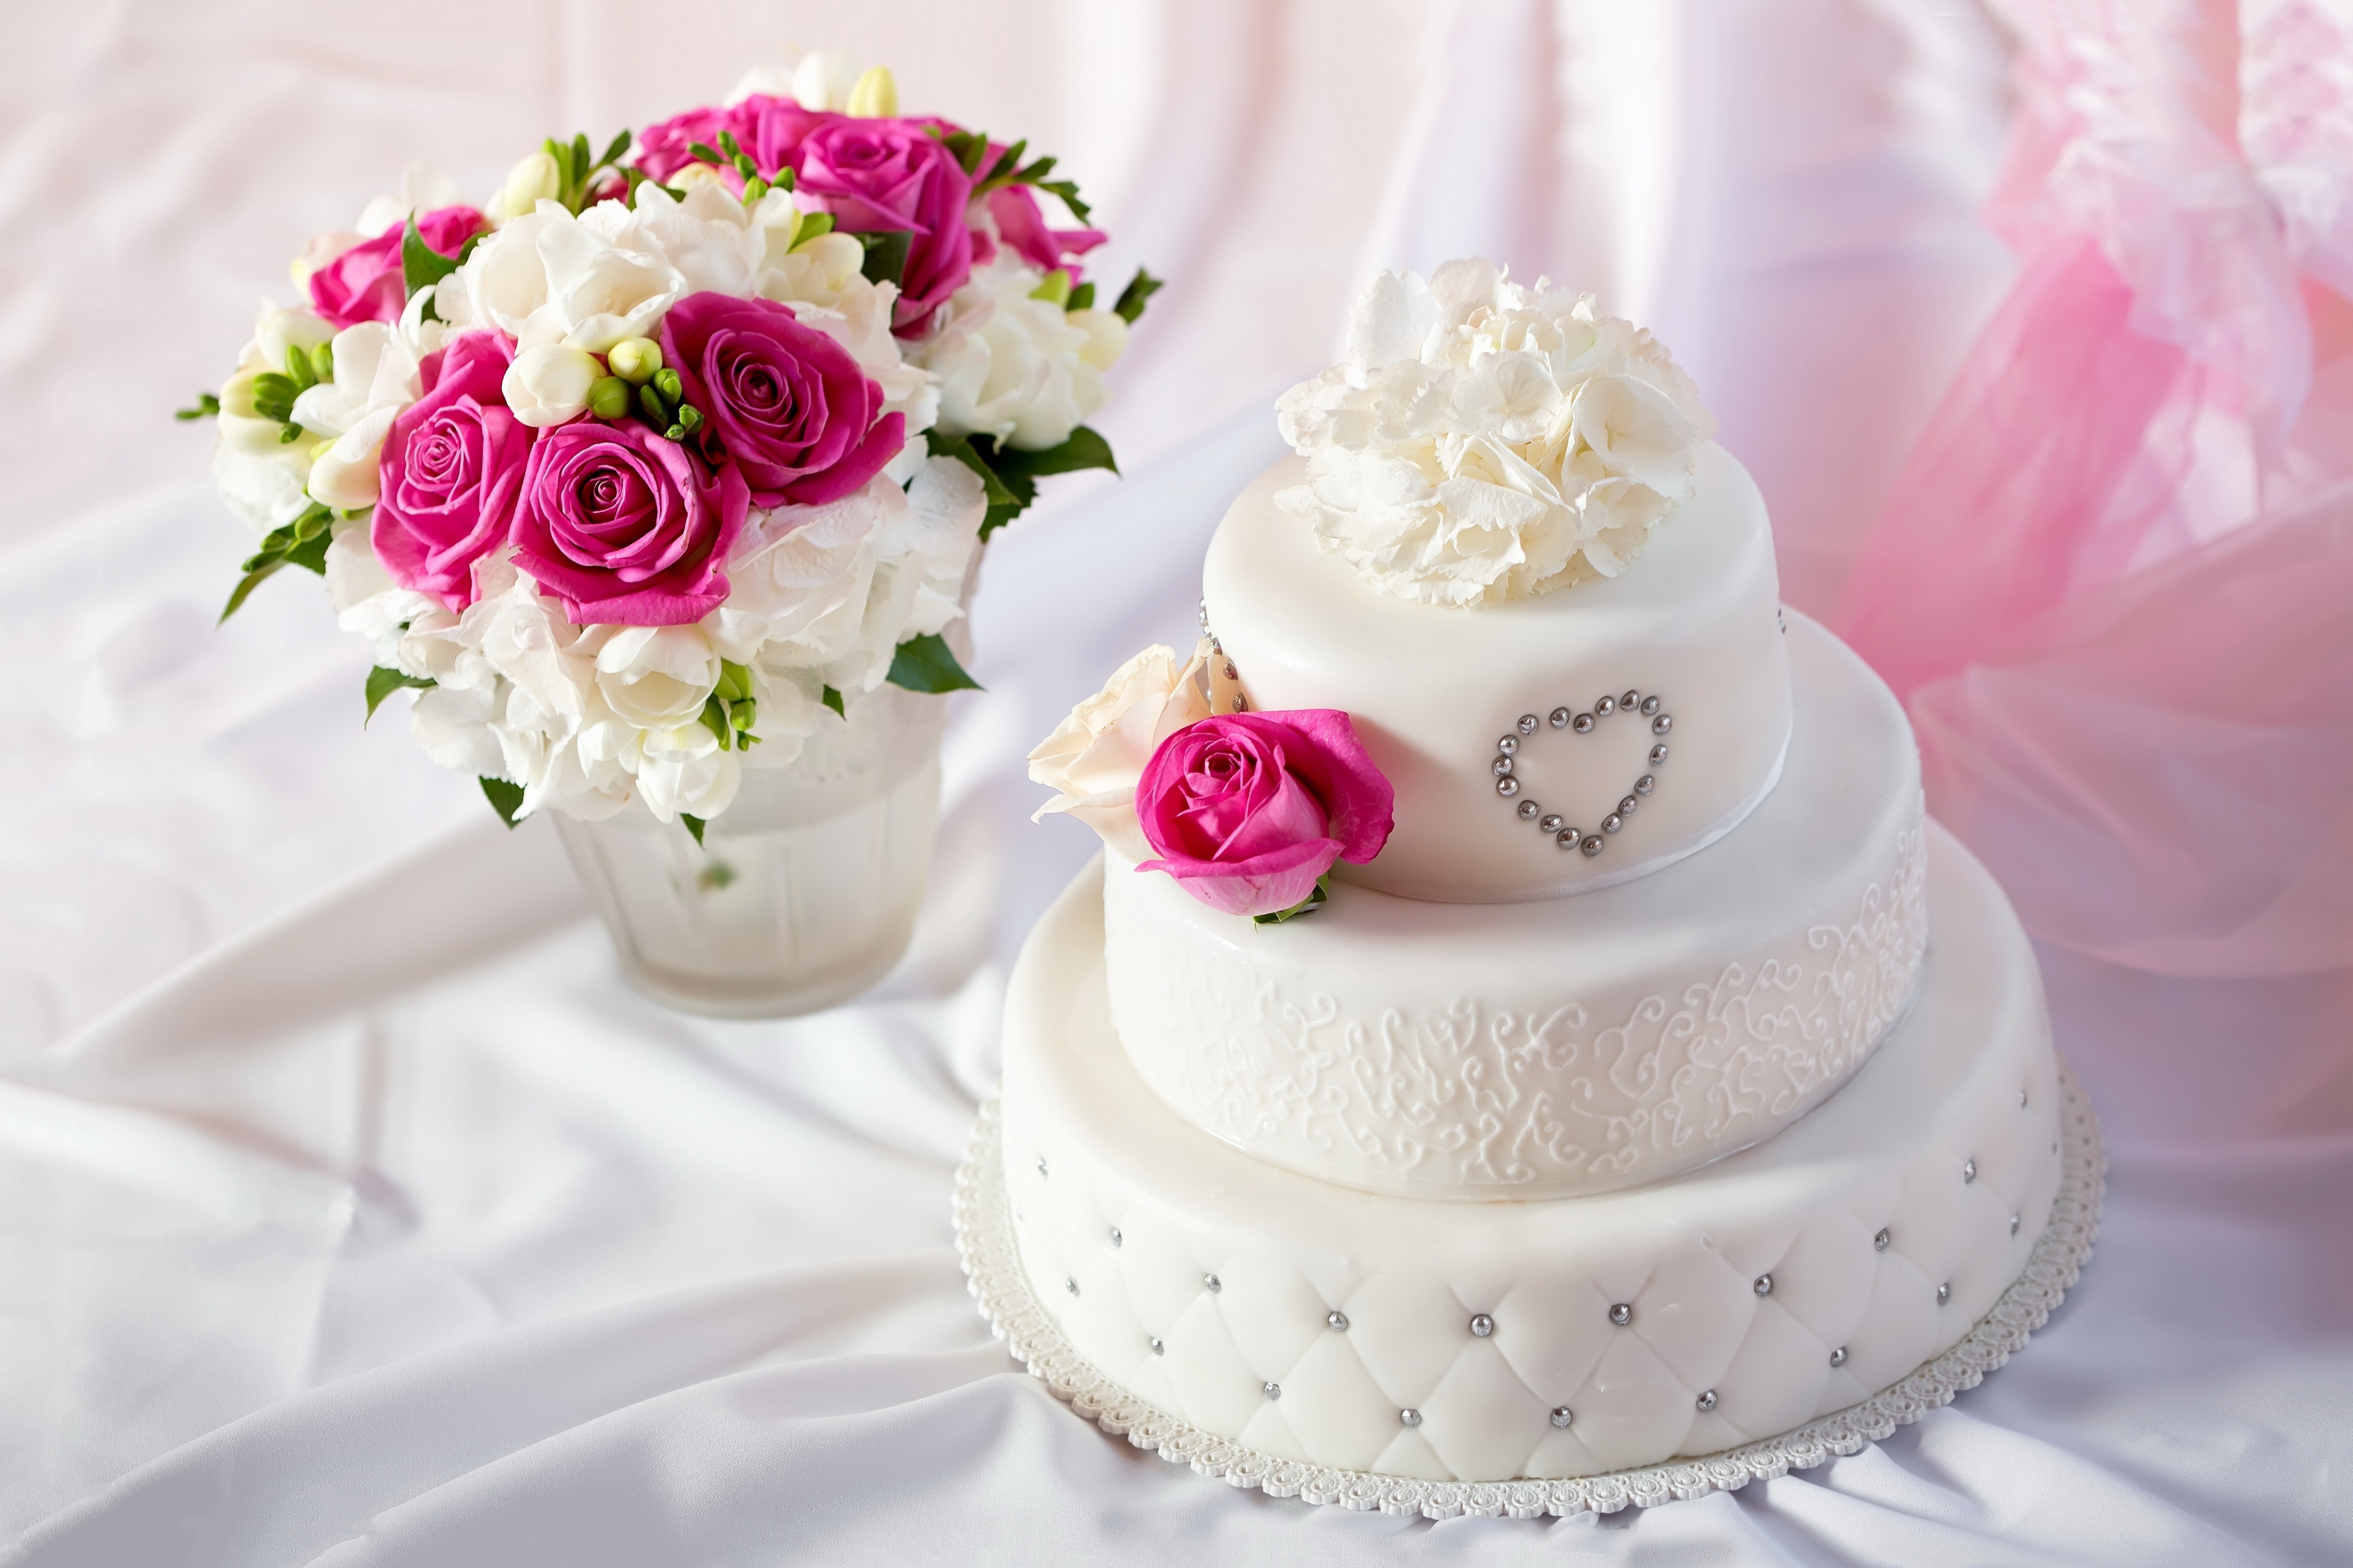 The Art of the Wedding Cake: By Yevnig